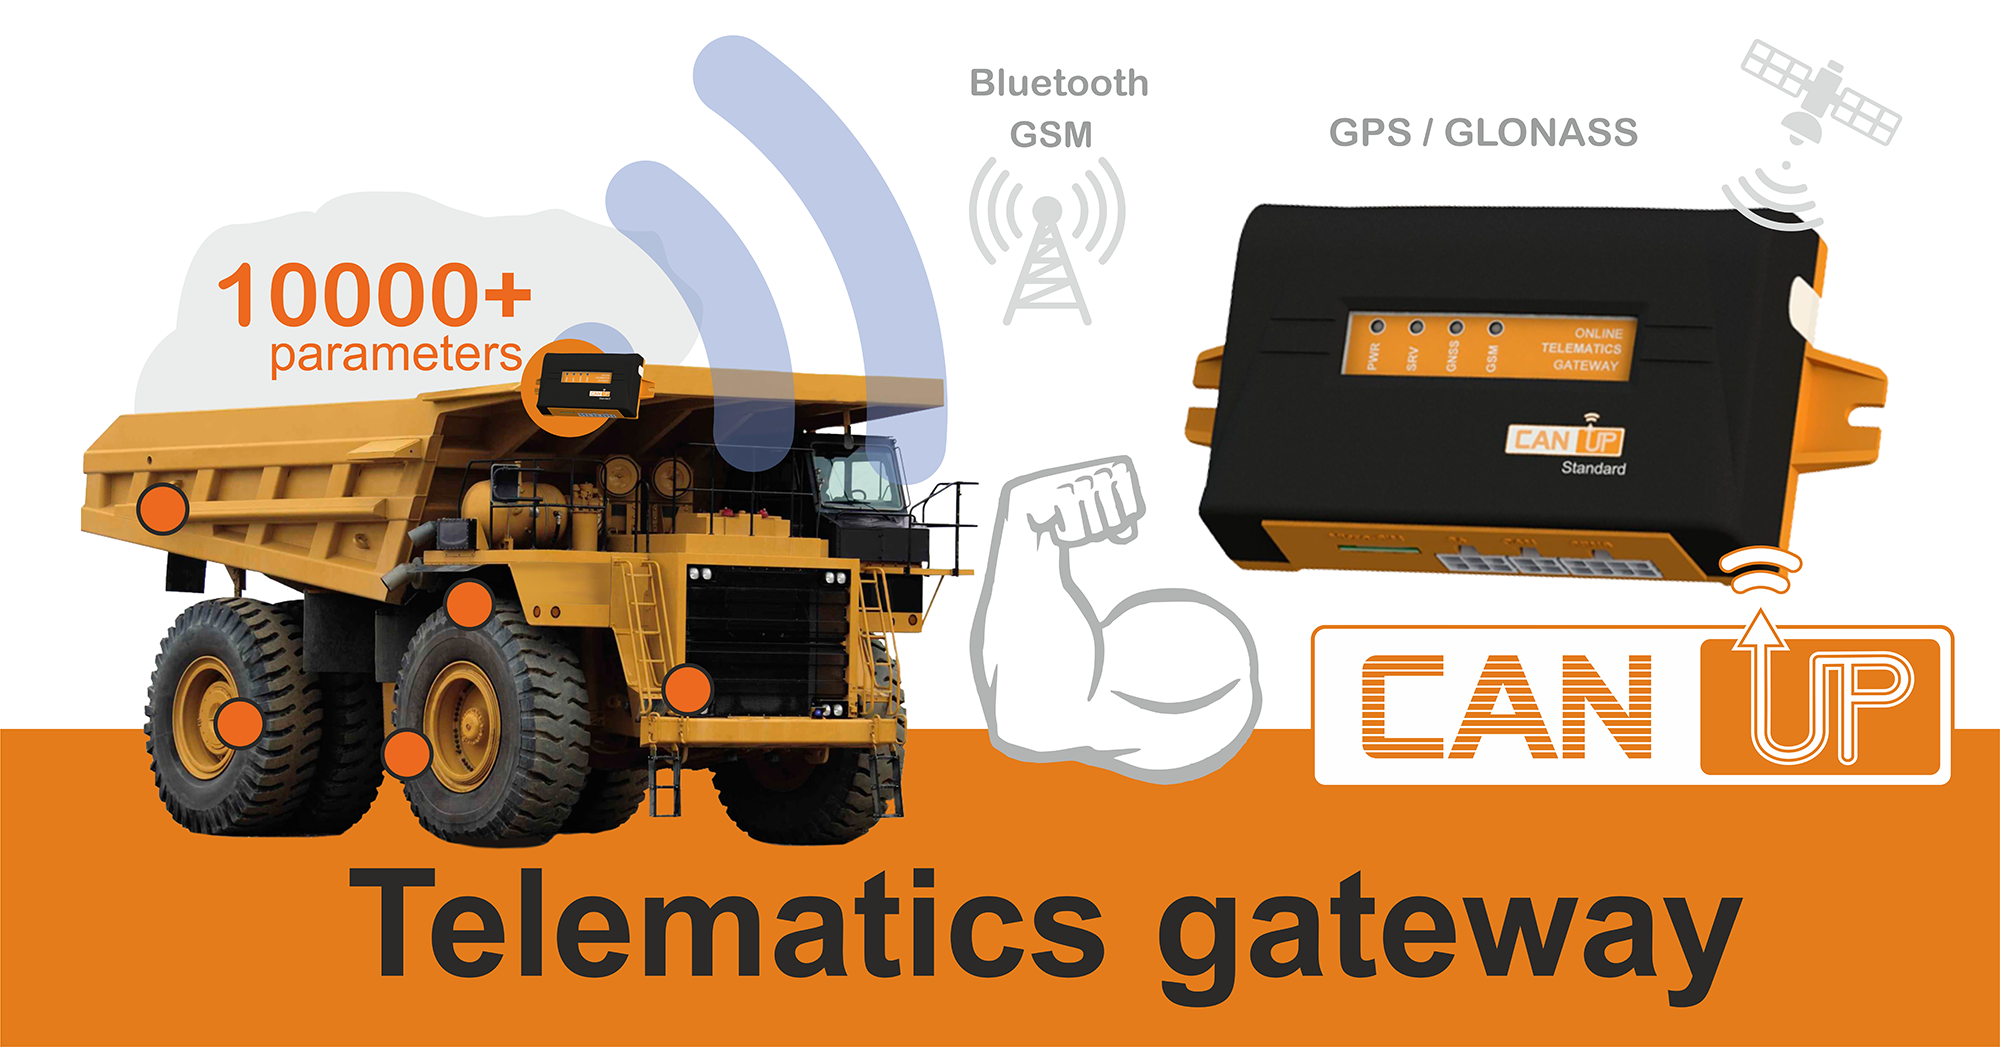 CANUp telematics gateway